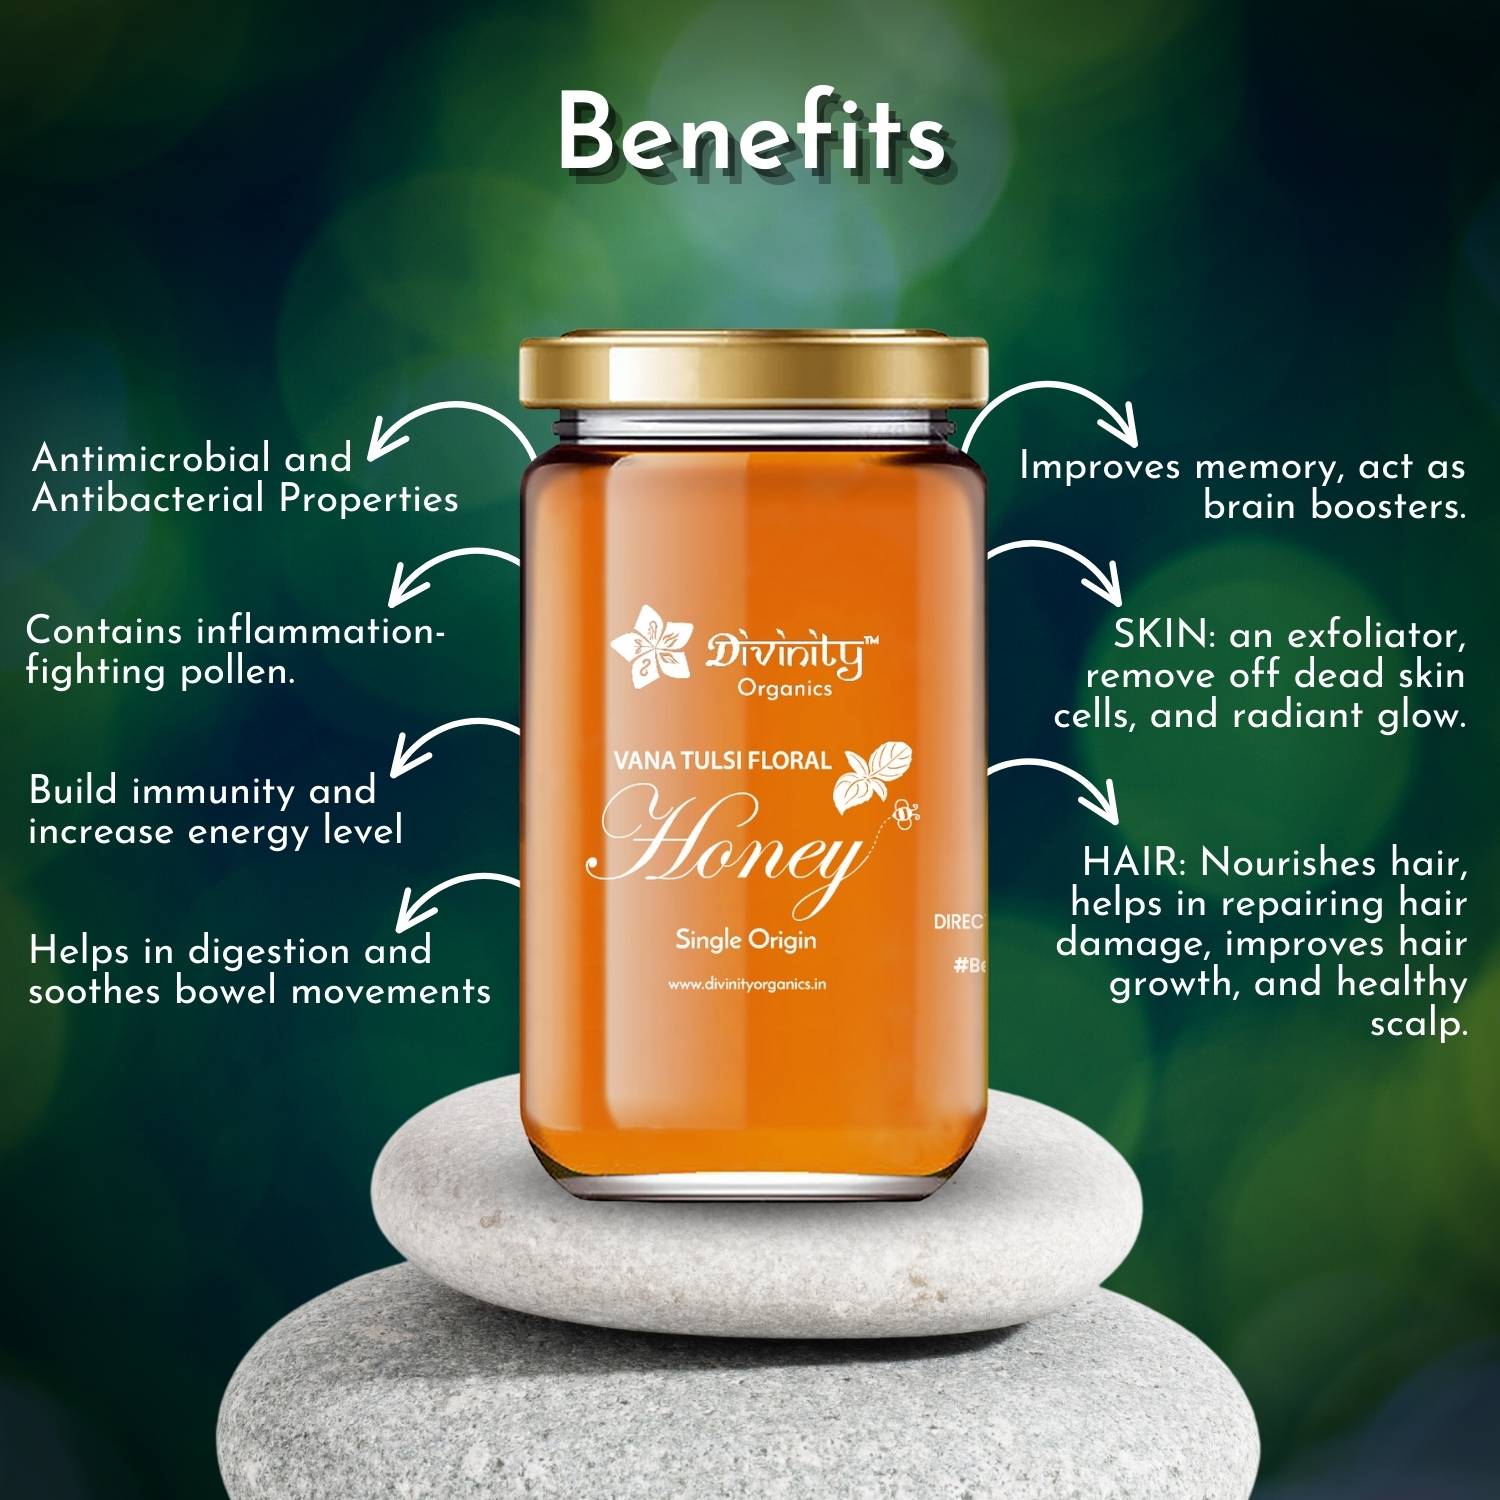 Divinity Organics - Vana Tulsi Floral Honey  Benefits